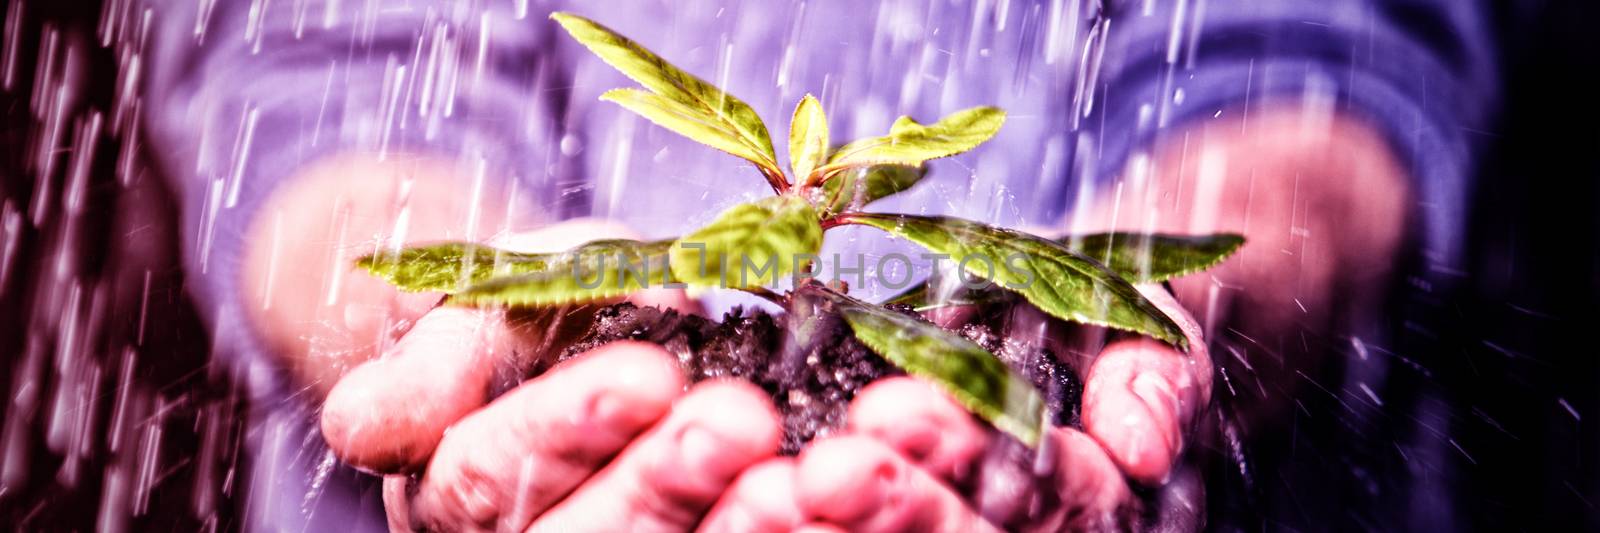 Hands holding seedling in the rain by Wavebreakmedia